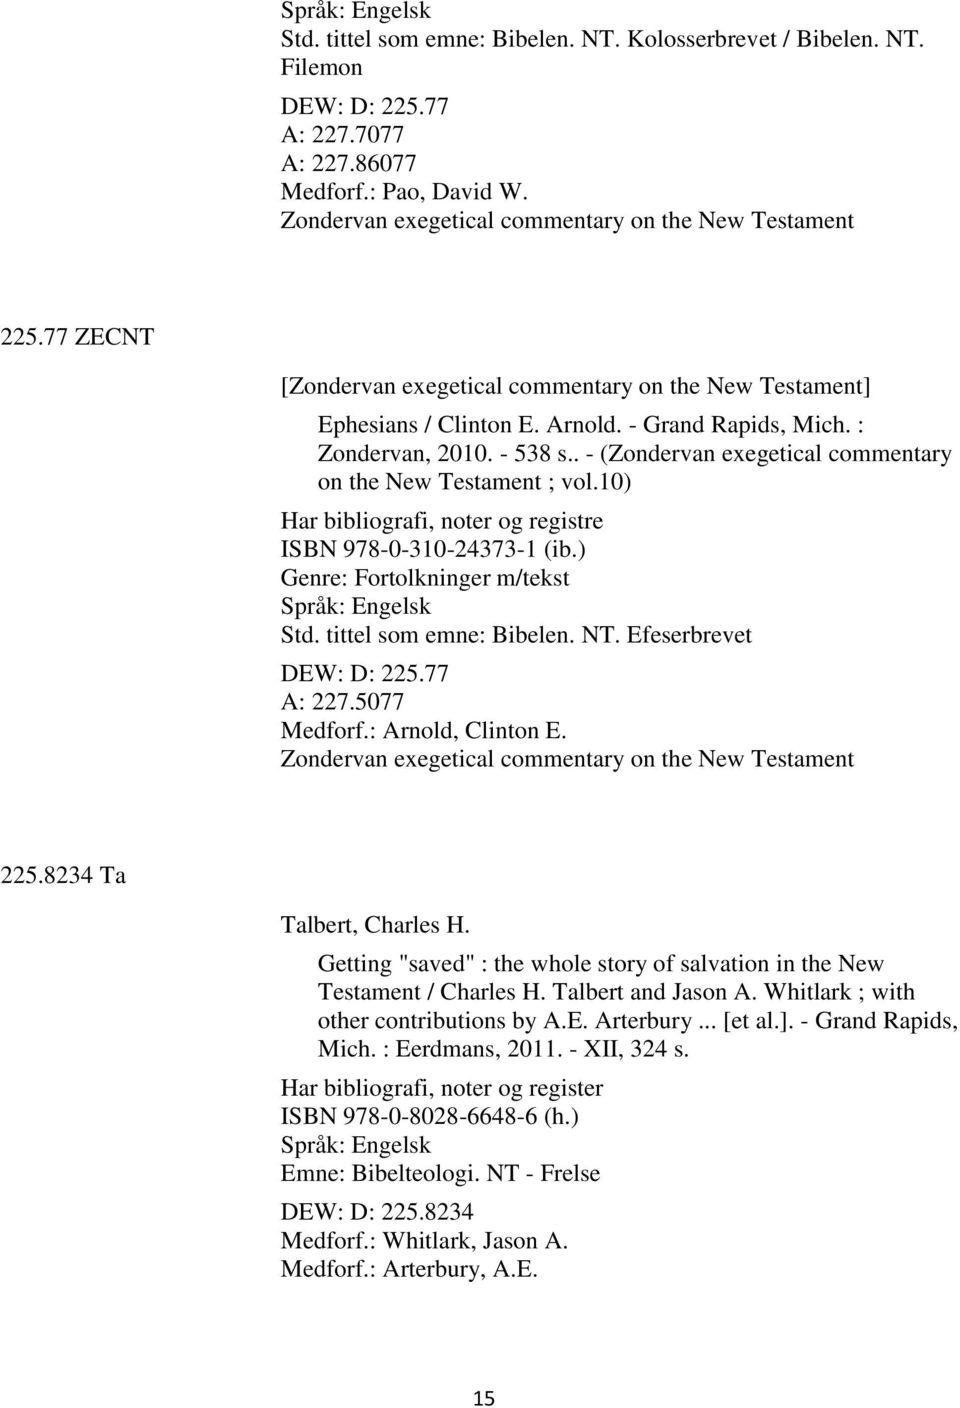 . - (Zondervan exegetical commentary on the New Testament ; vol.10) ISBN 978-0-310-24373-1 (ib.) Std. tittel som emne: Bibelen. NT. Efeserbrevet DEW: D: 225.77 A: 227.5077 Medforf.: Arnold, Clinton E.